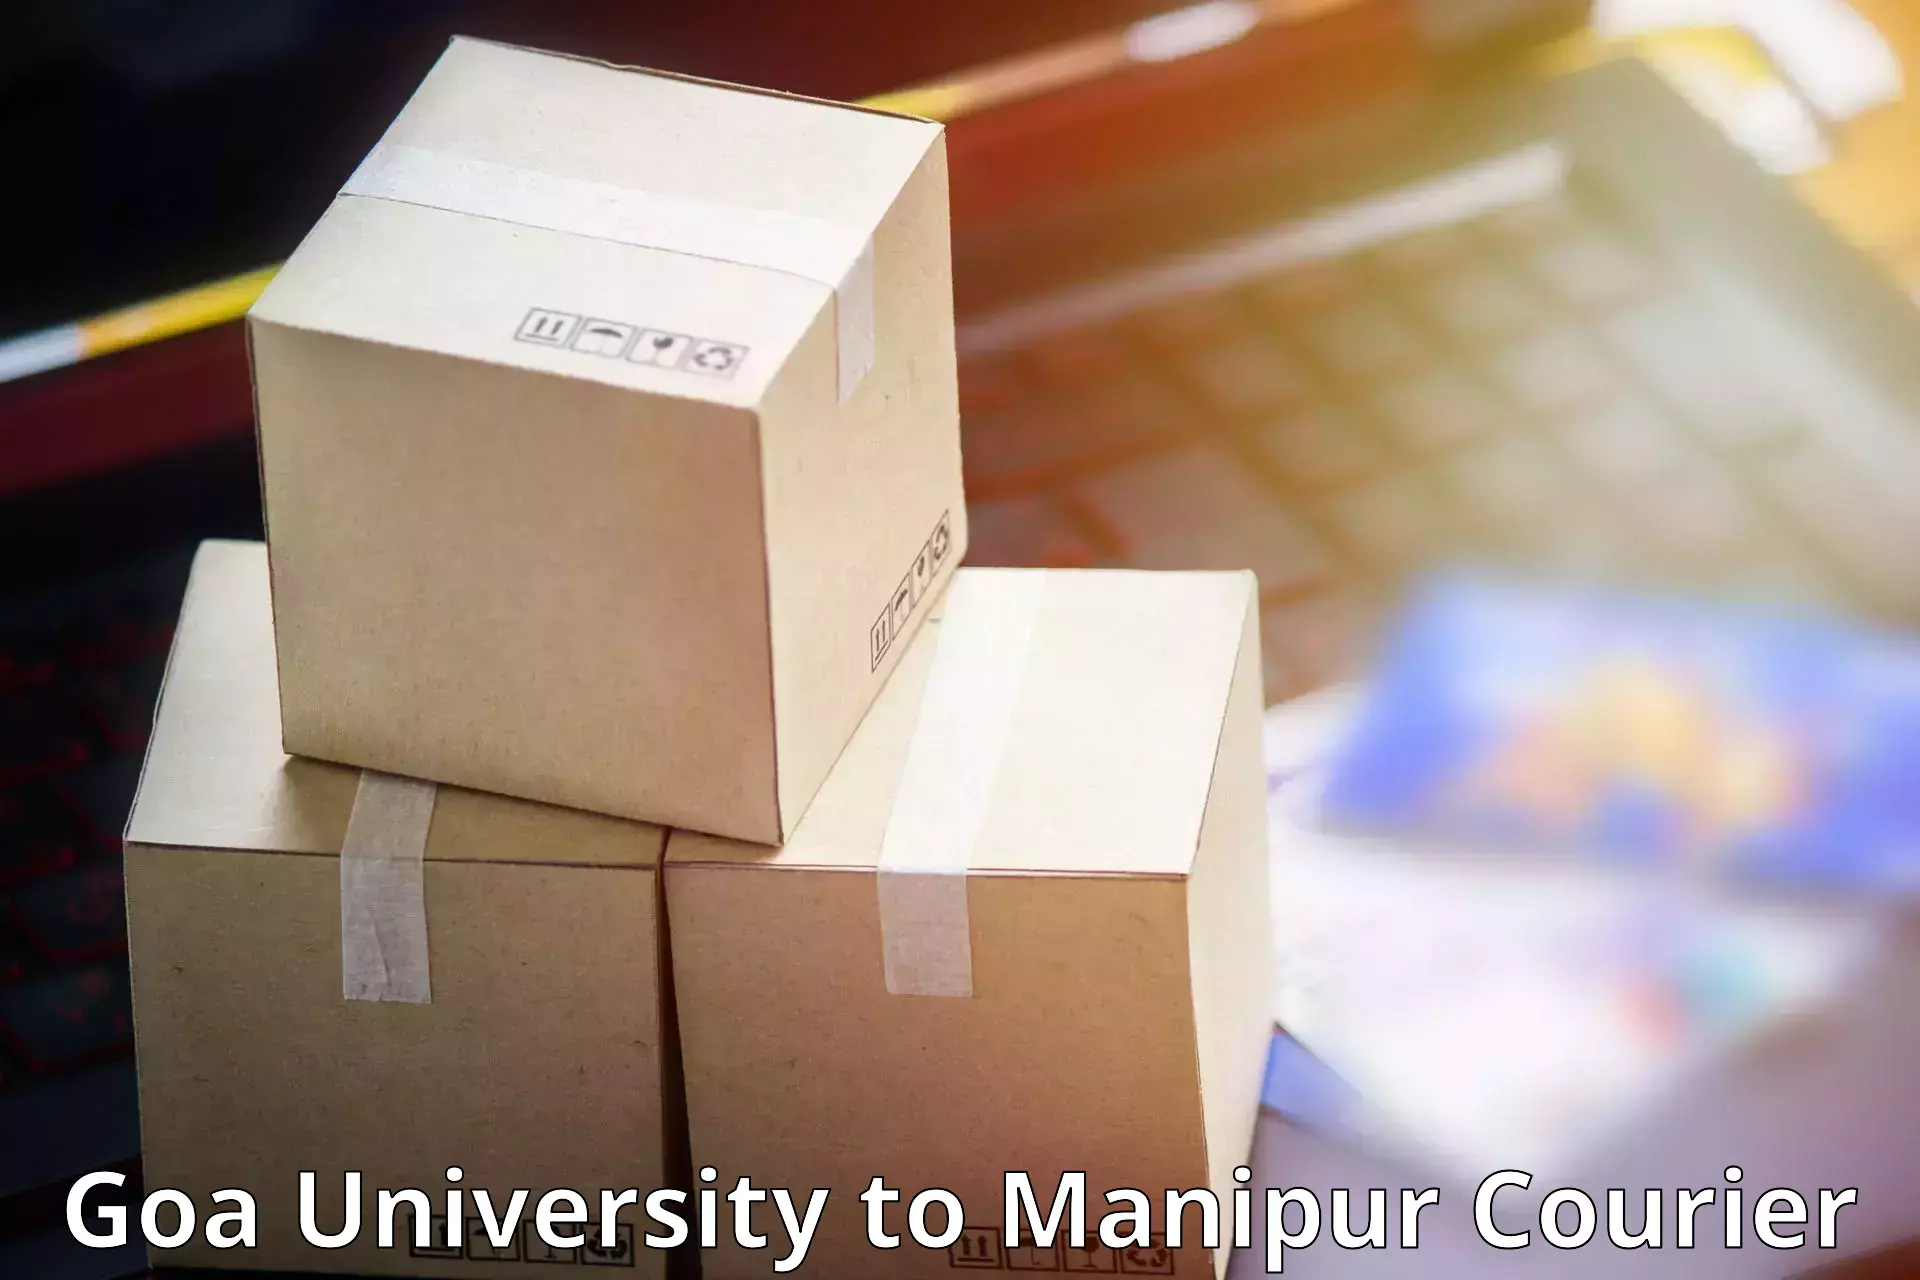 High-capacity parcel service Goa University to Manipur